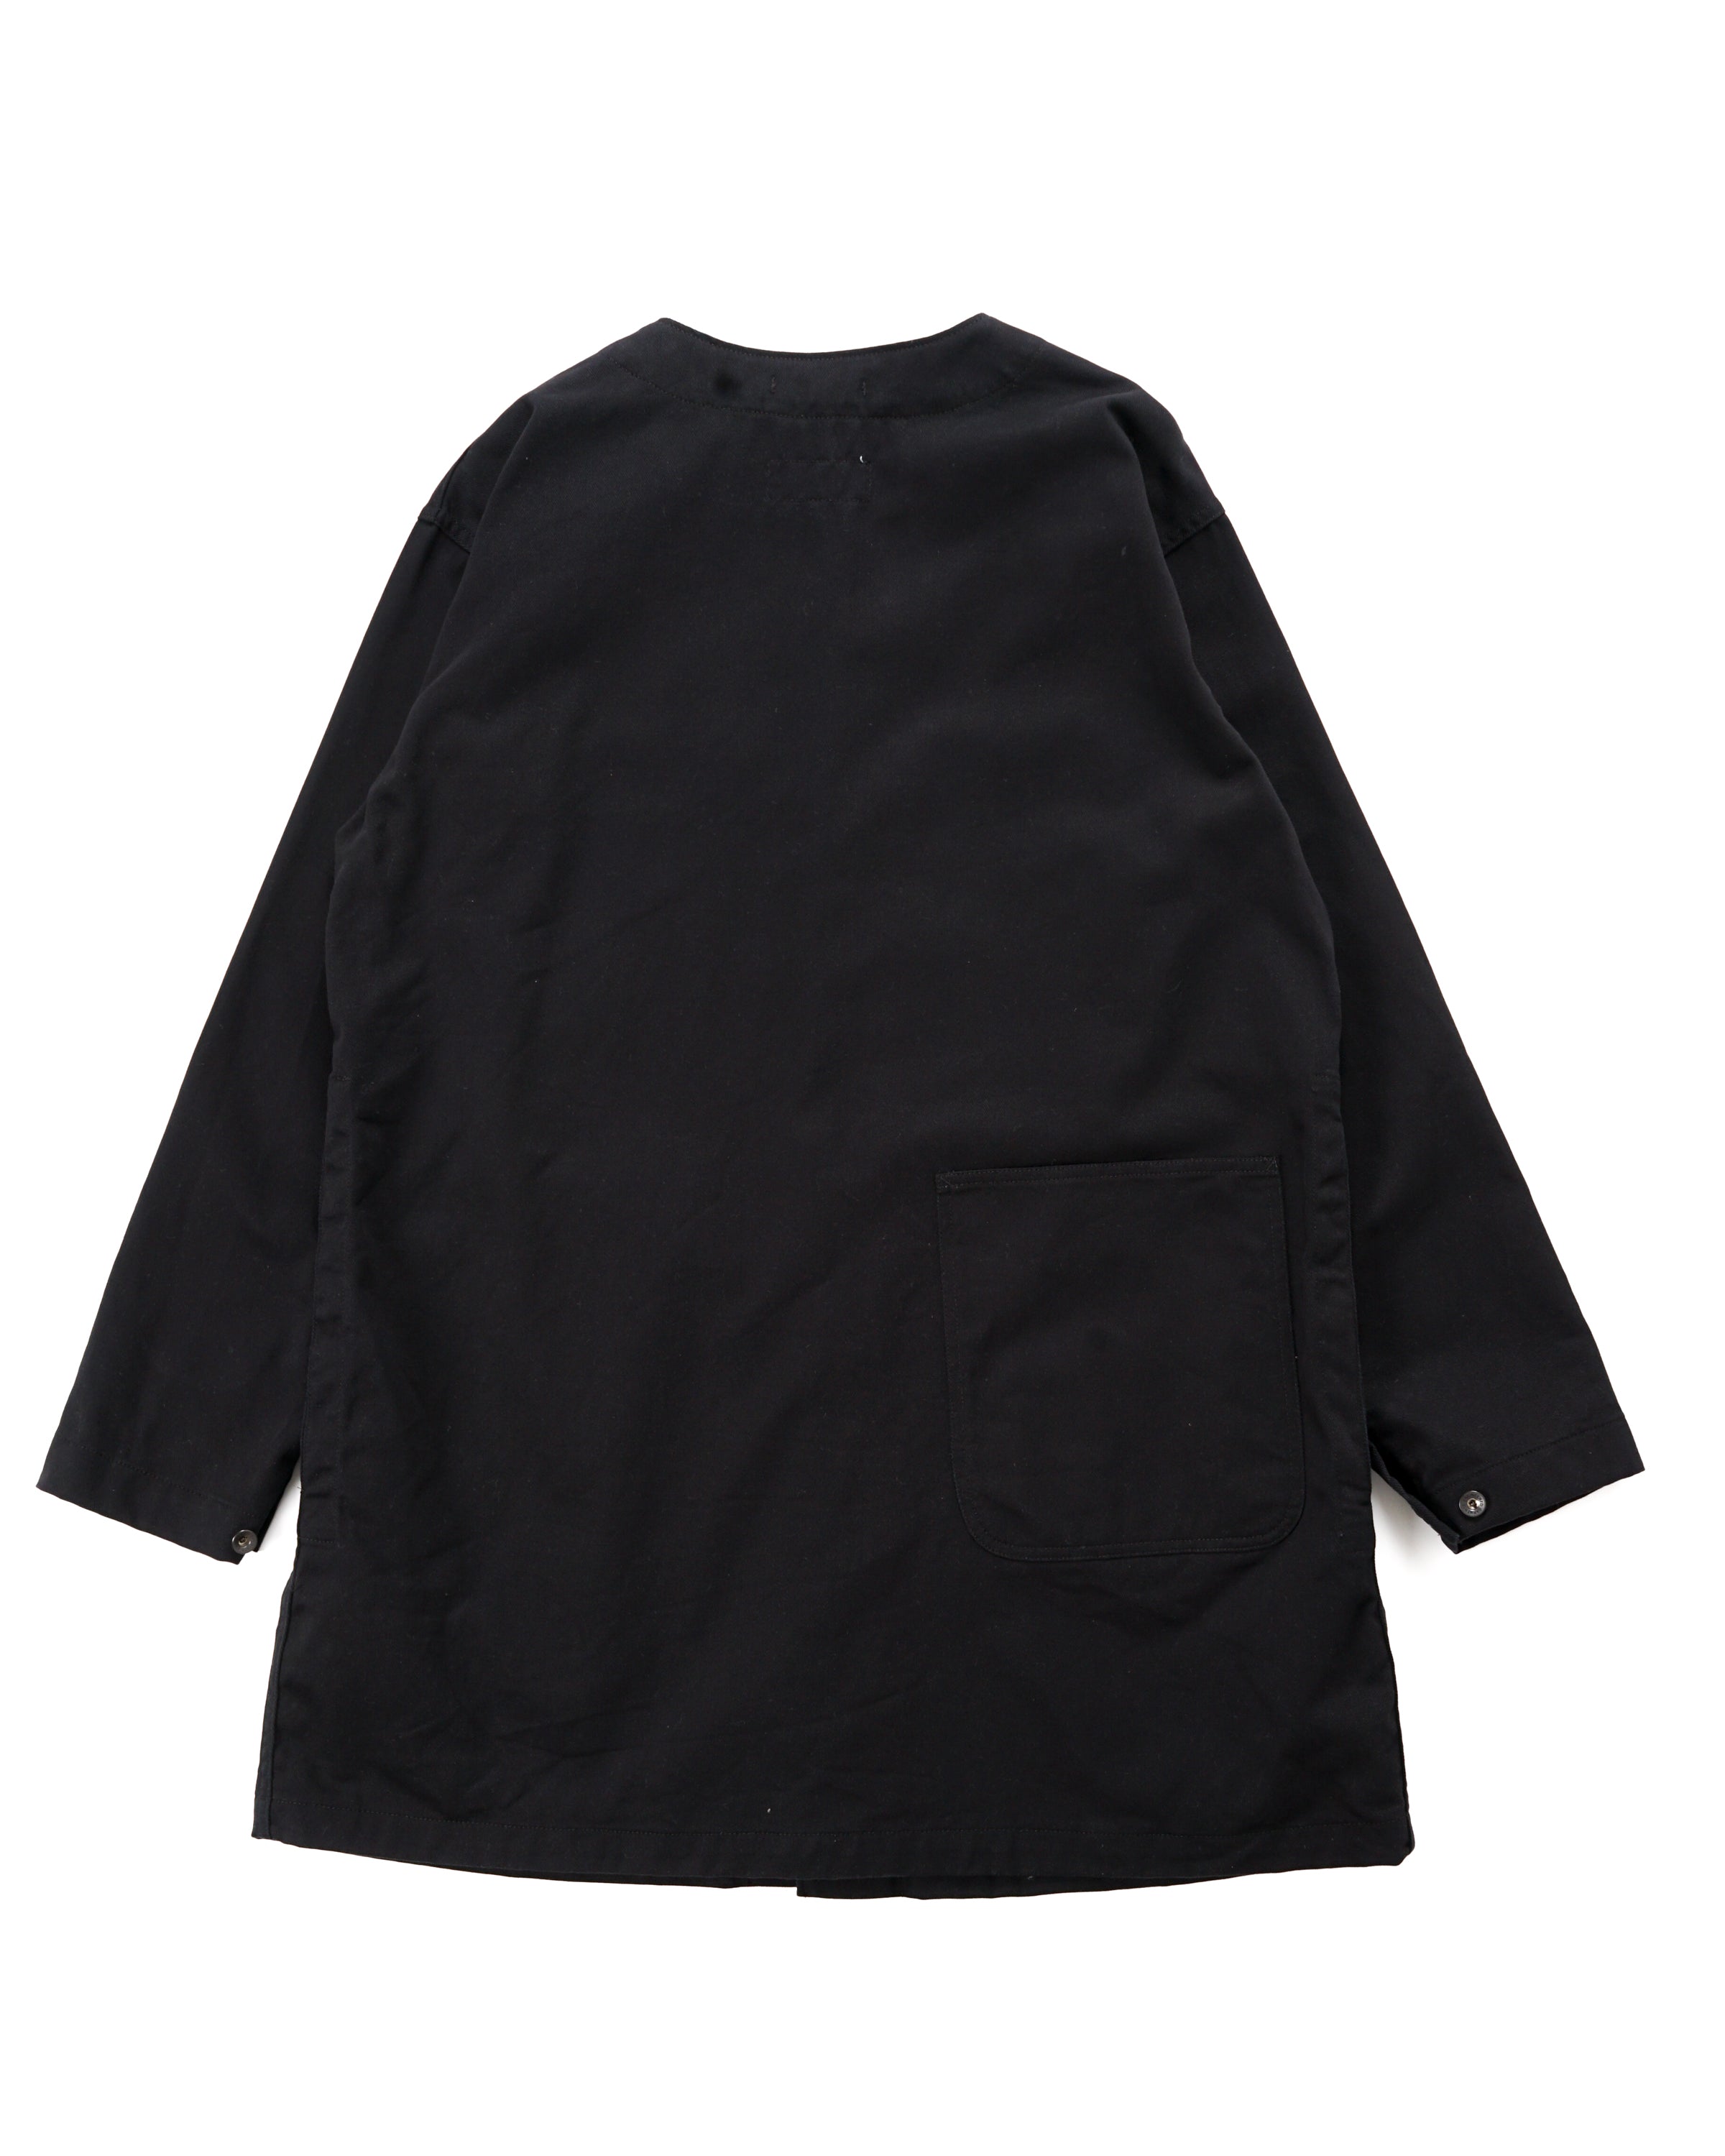 Engineer Coat - Black Cotton Heavy Twill